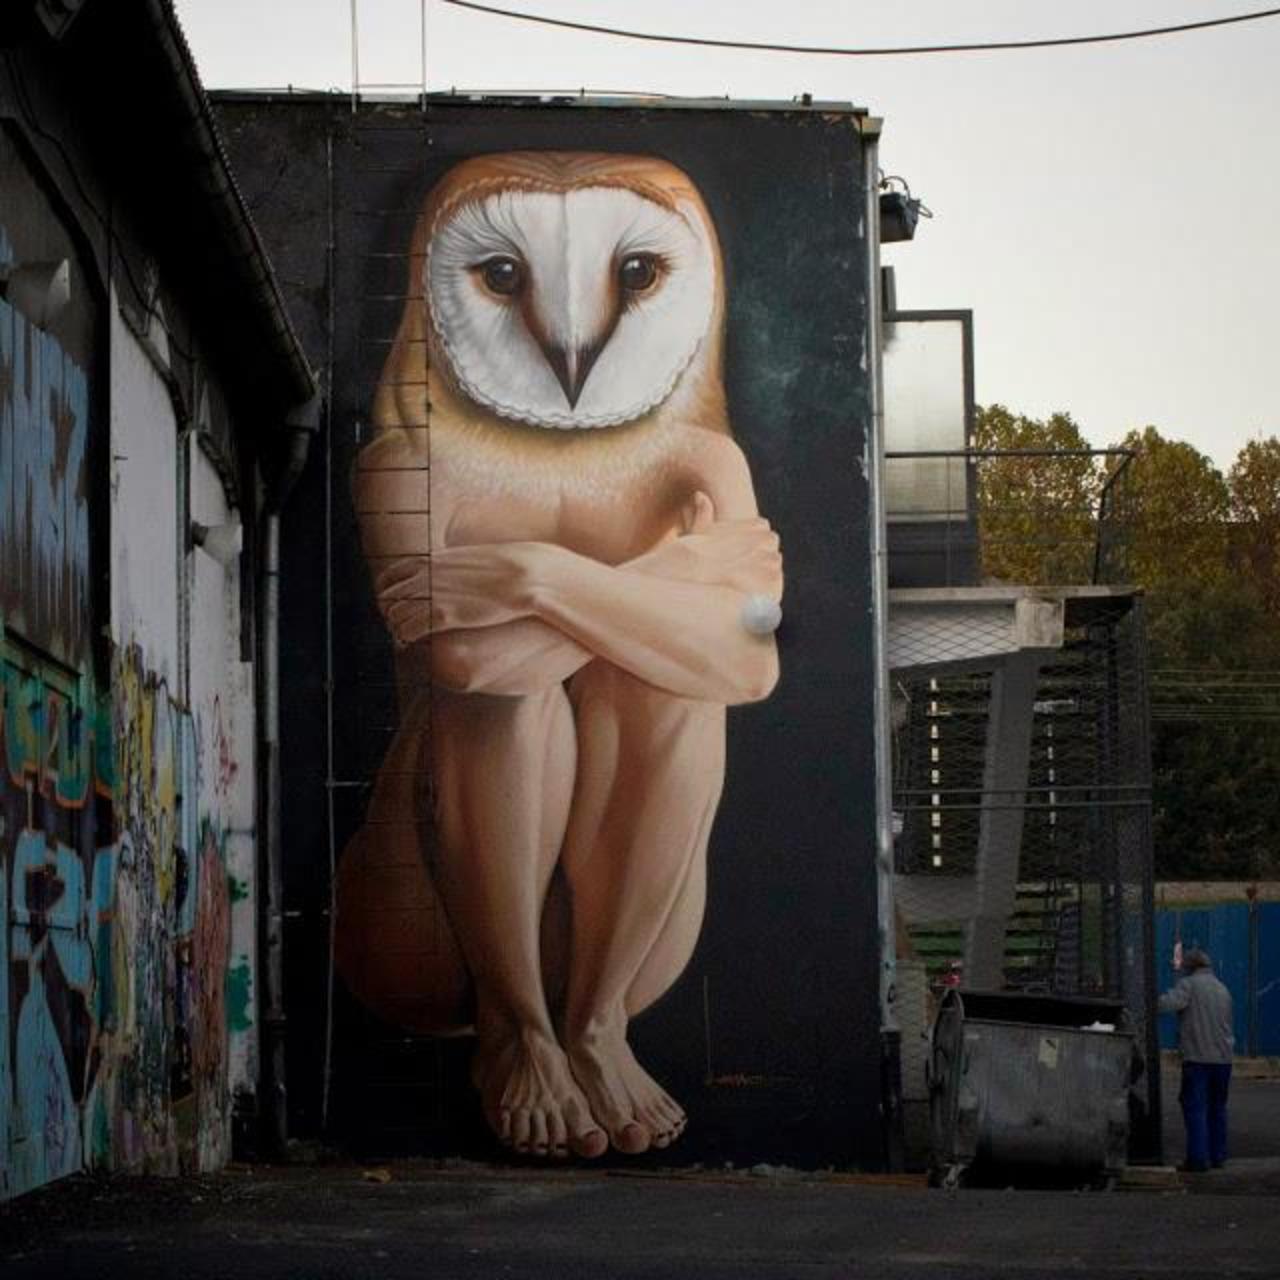 RT @allcitycanvas:Croatian #artist #Lonac​'s hyperrealistic human-owl #mural in Zagreb, #Croatia #streetart #graffiti http://t.co/jPgdJYxzcI